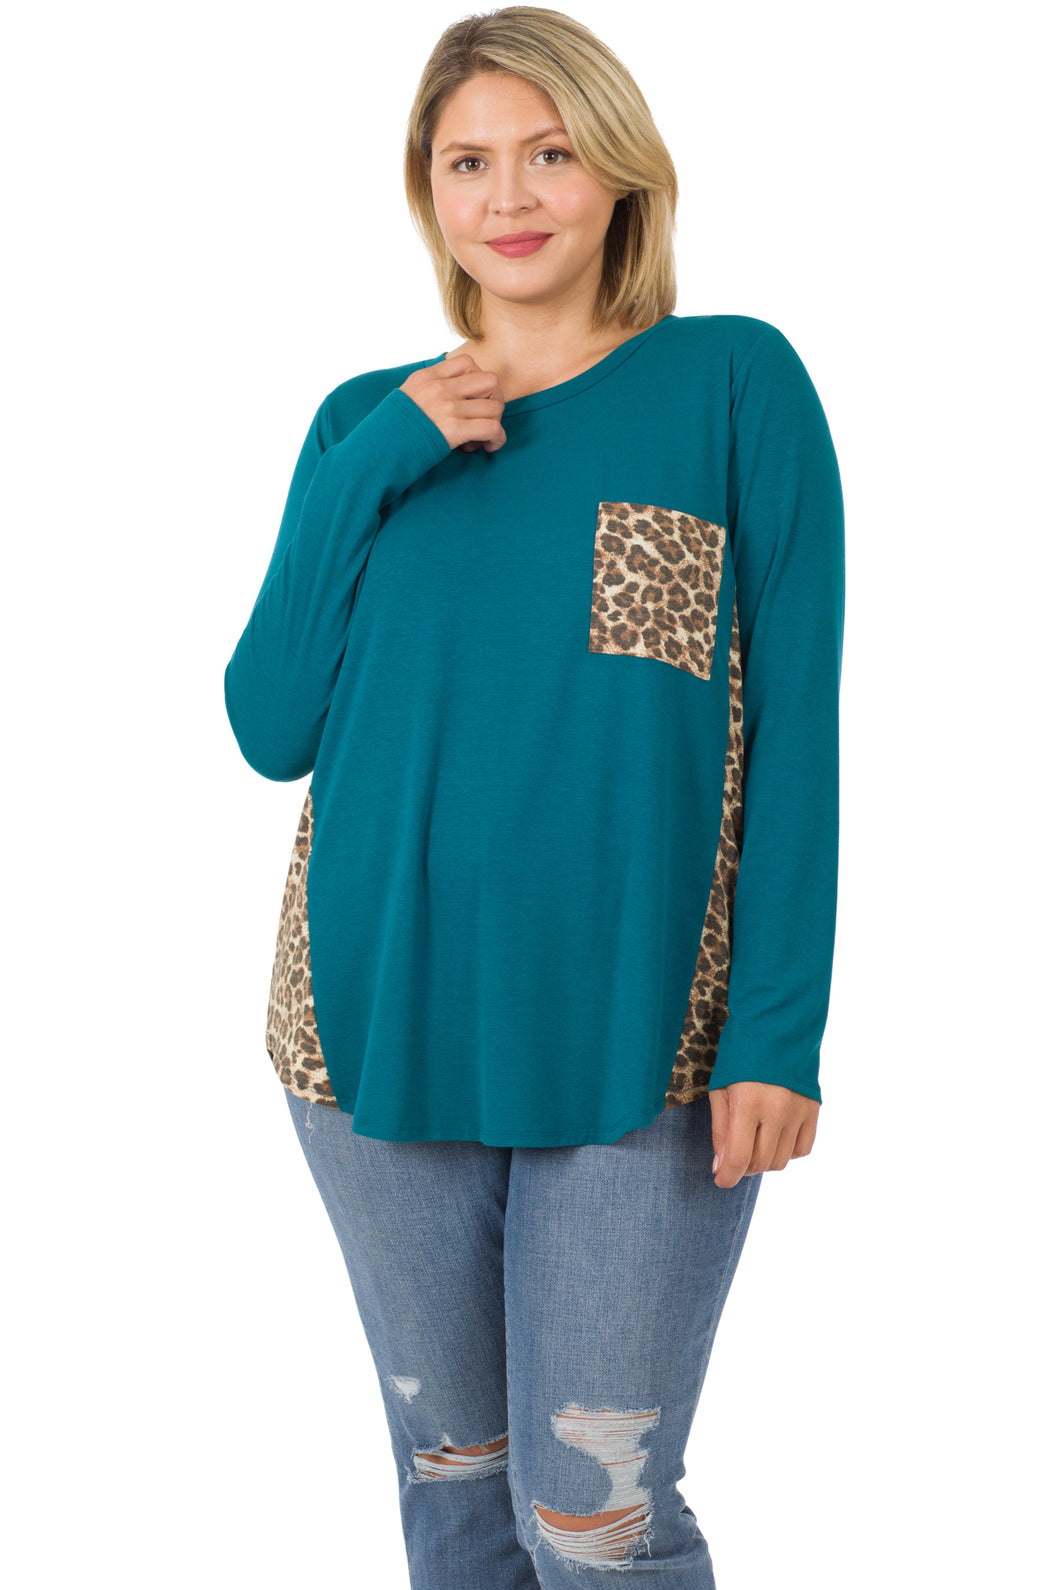 Long Sleeve Leopard Shirt Teal Size S